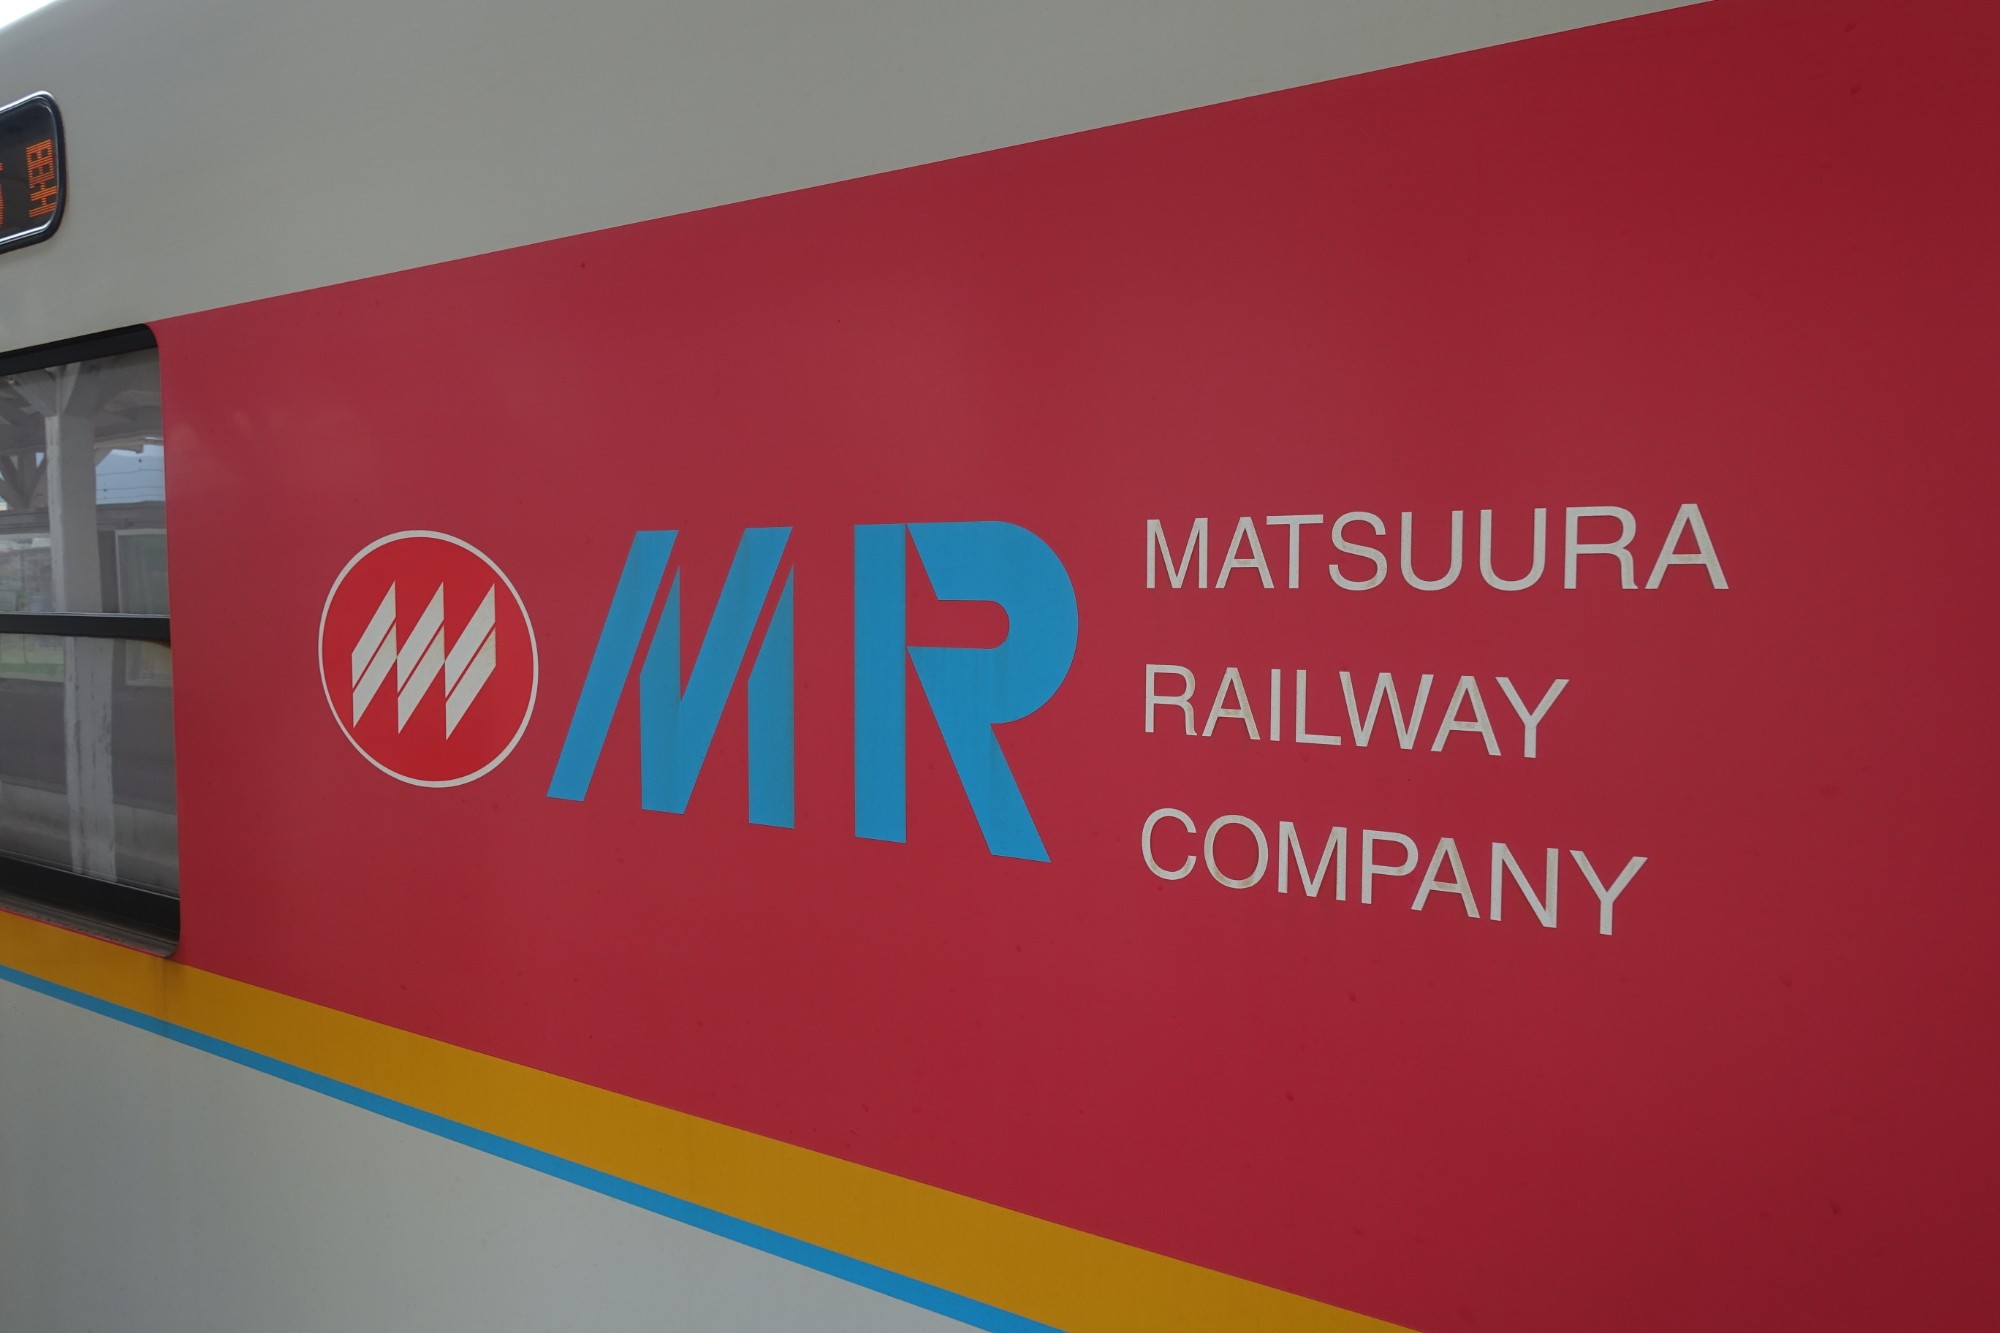 All aboard the Matsuura Railway